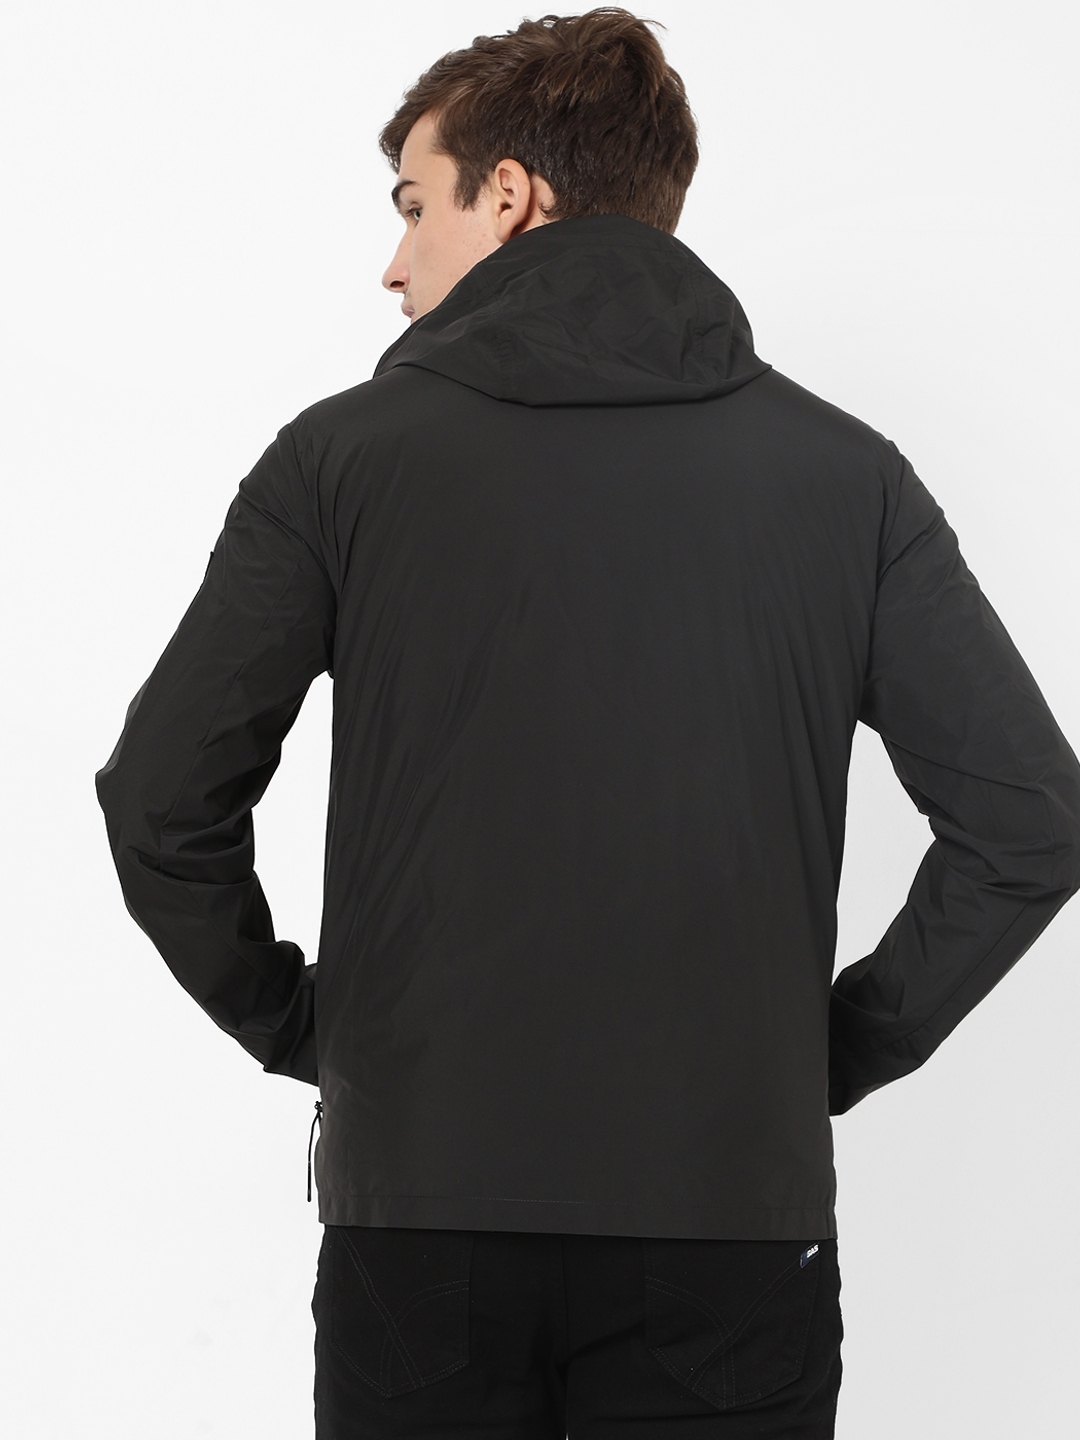 NEW Size S Small Mens Adidas Rise Up N Run Black Hooded Running Jacket  EC7022 | Running jacket, Adidas men, Clothes design